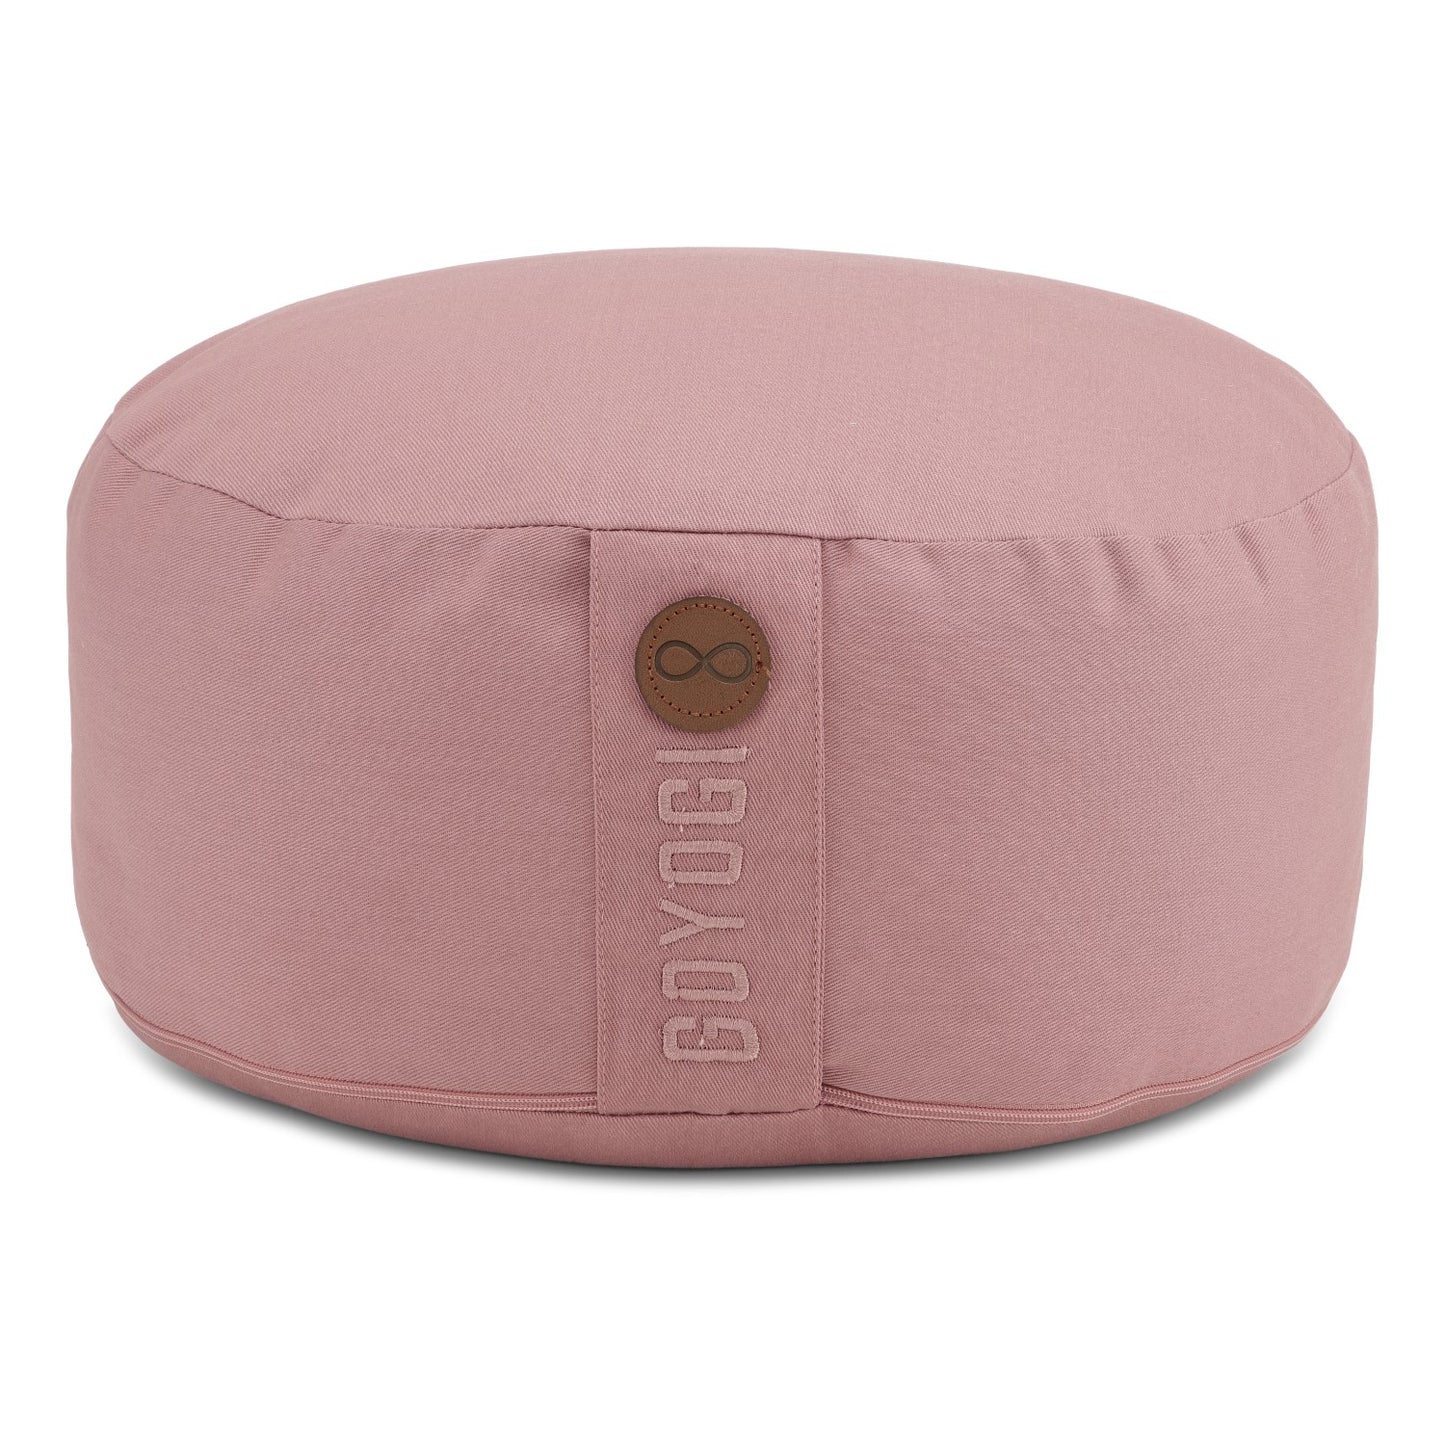 Calm Round Meditation Cushion - Pink